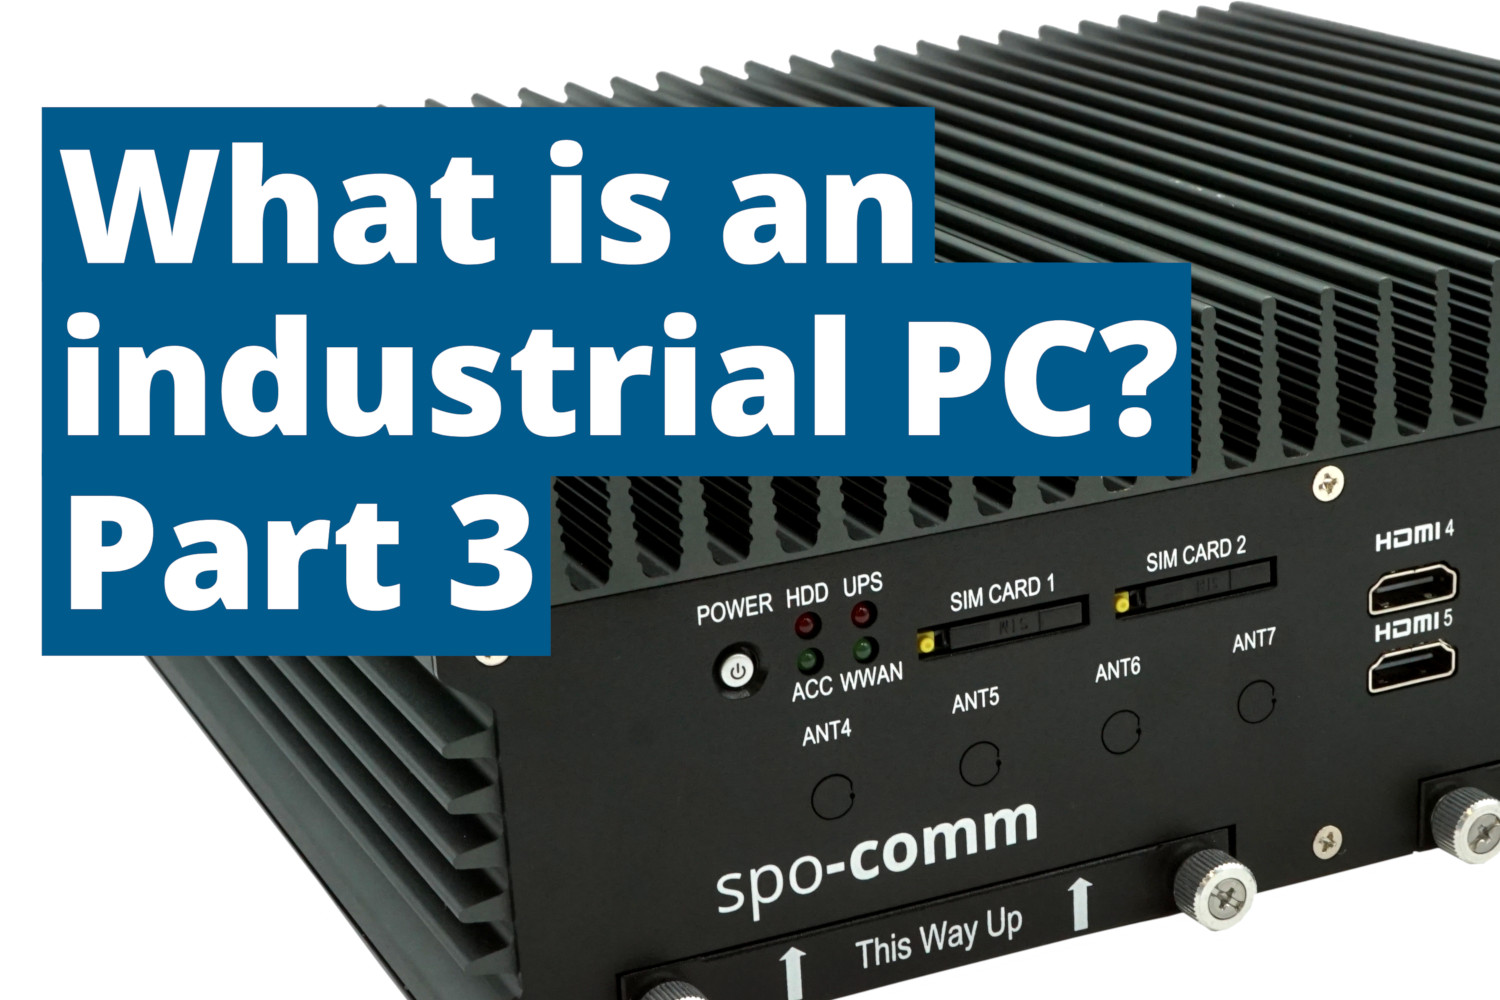 Industrial PCs part 3: The temperature range